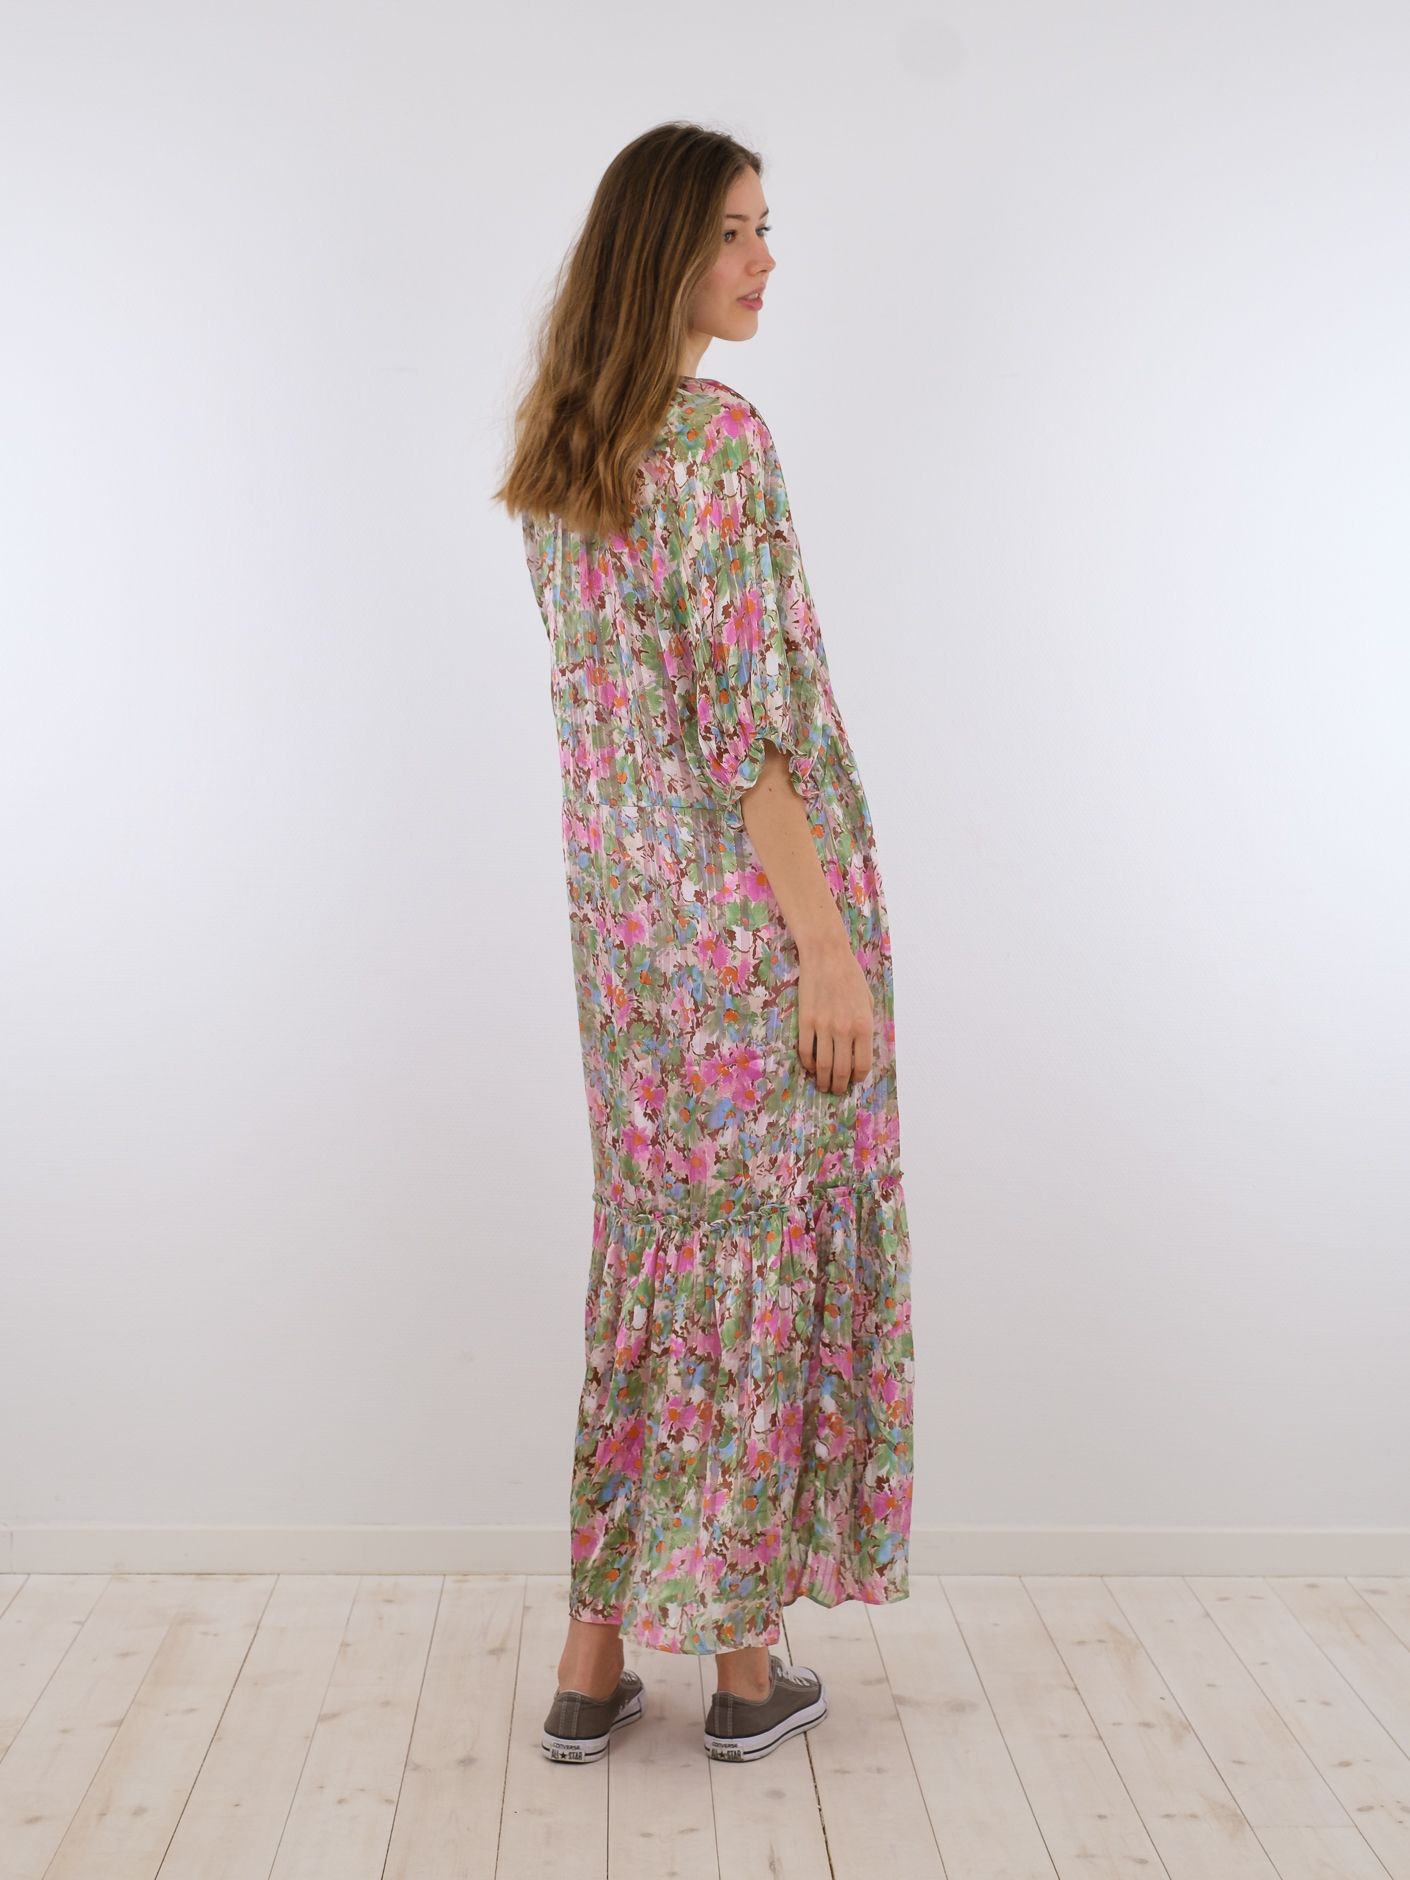 Neo Noir - Milla Flower Dress - Butik Emsig